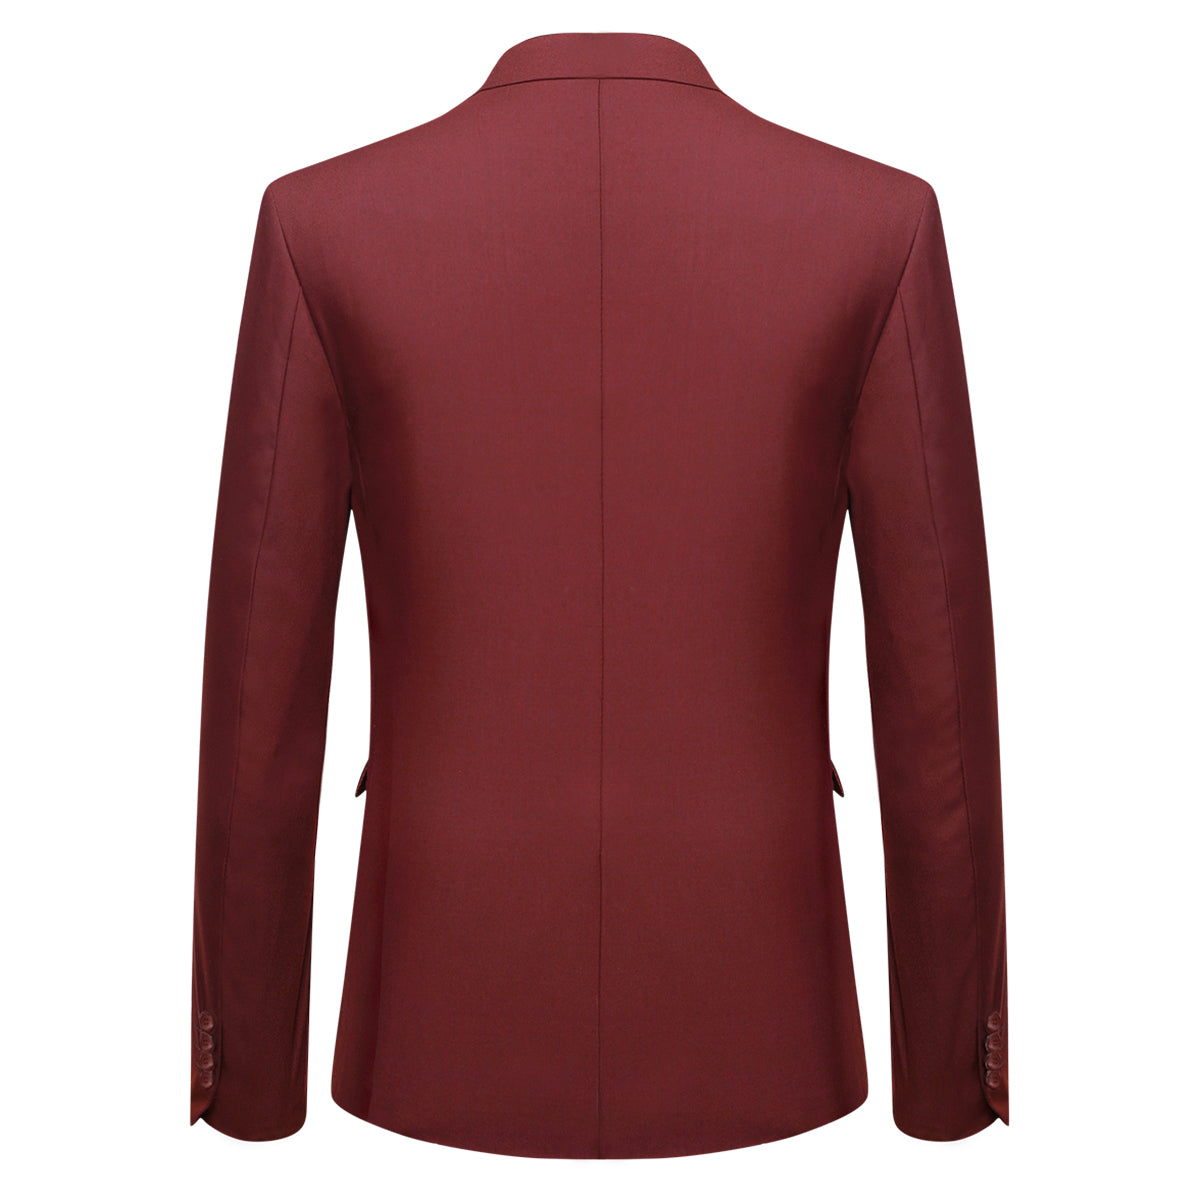 2-Piece Slim Fit Simple Designed Wine Red Suit